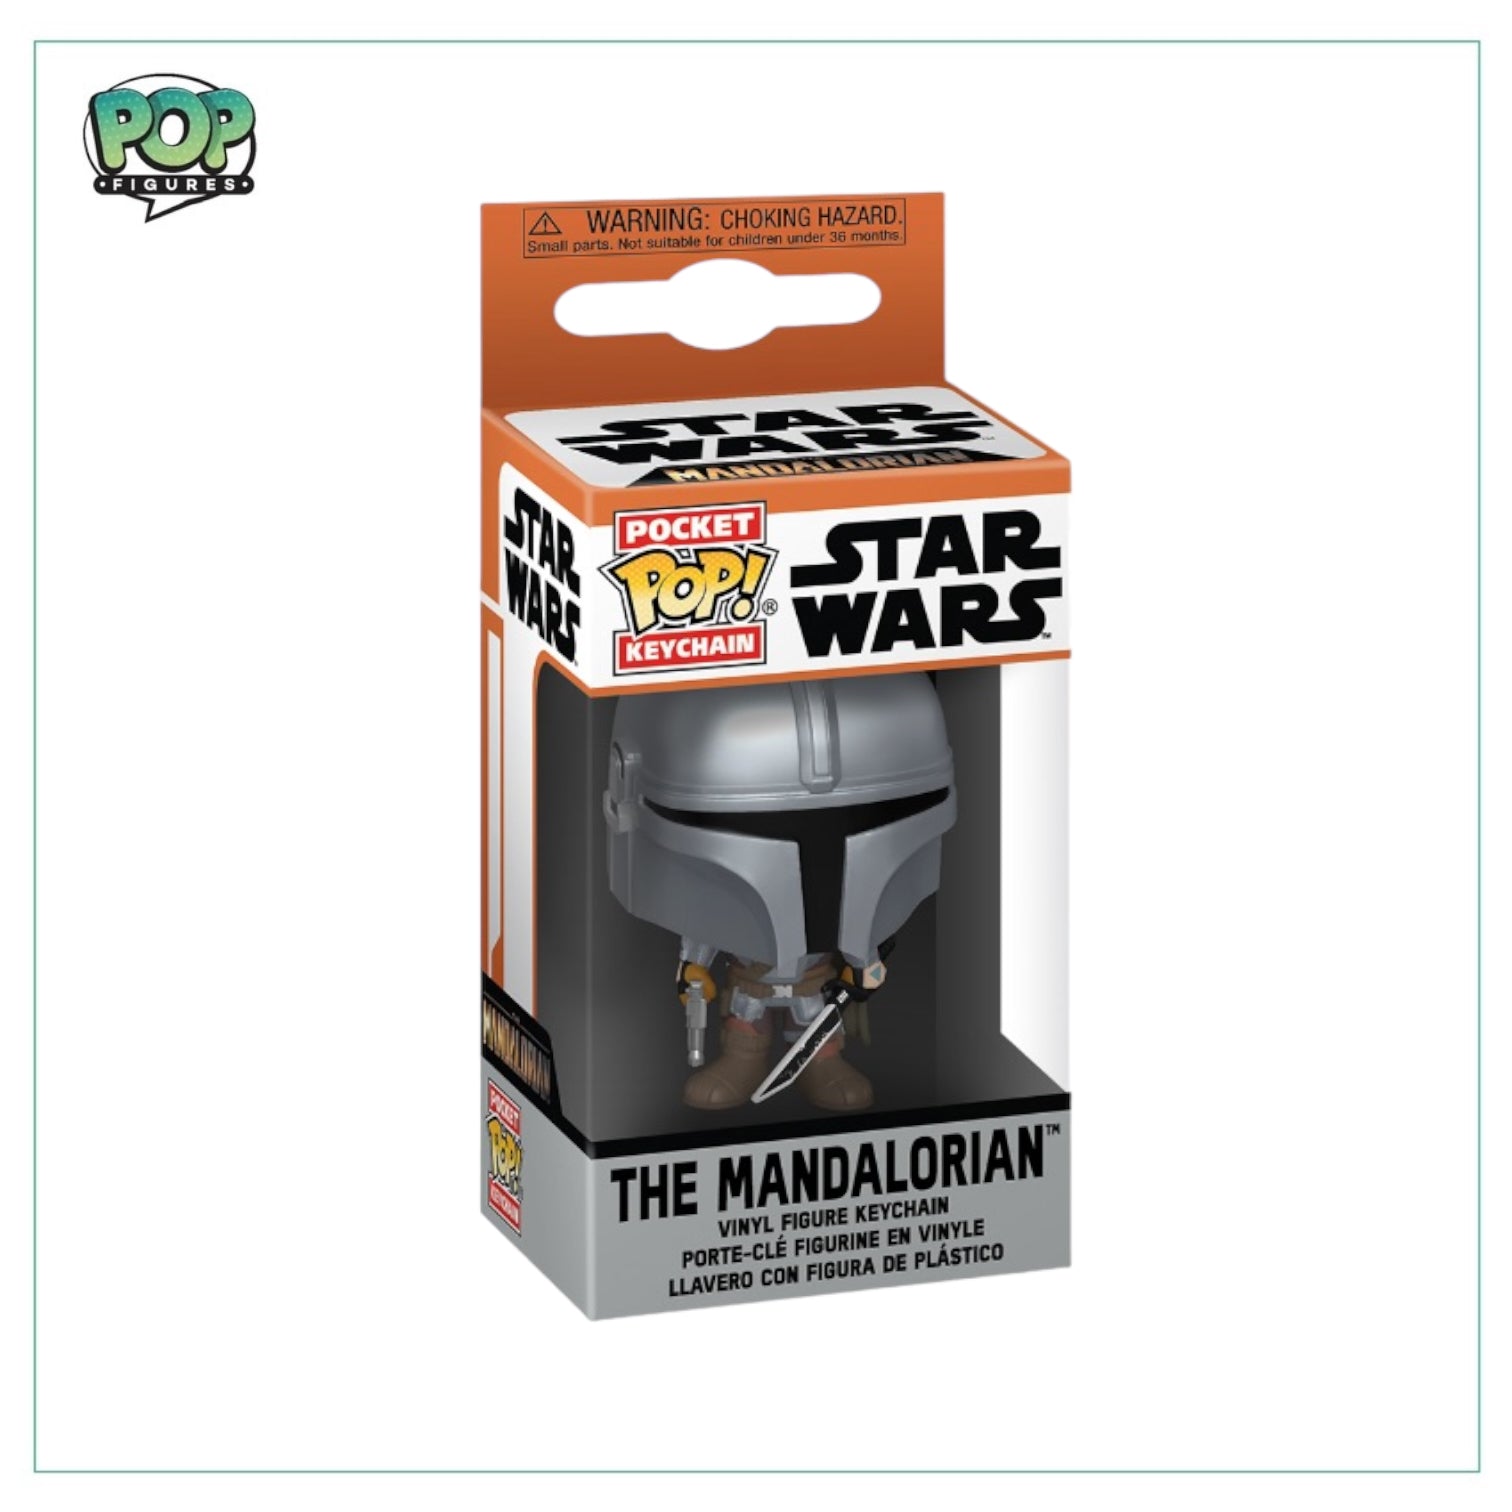 The Mandalorian Pocket Pop Keychain - Star Wars